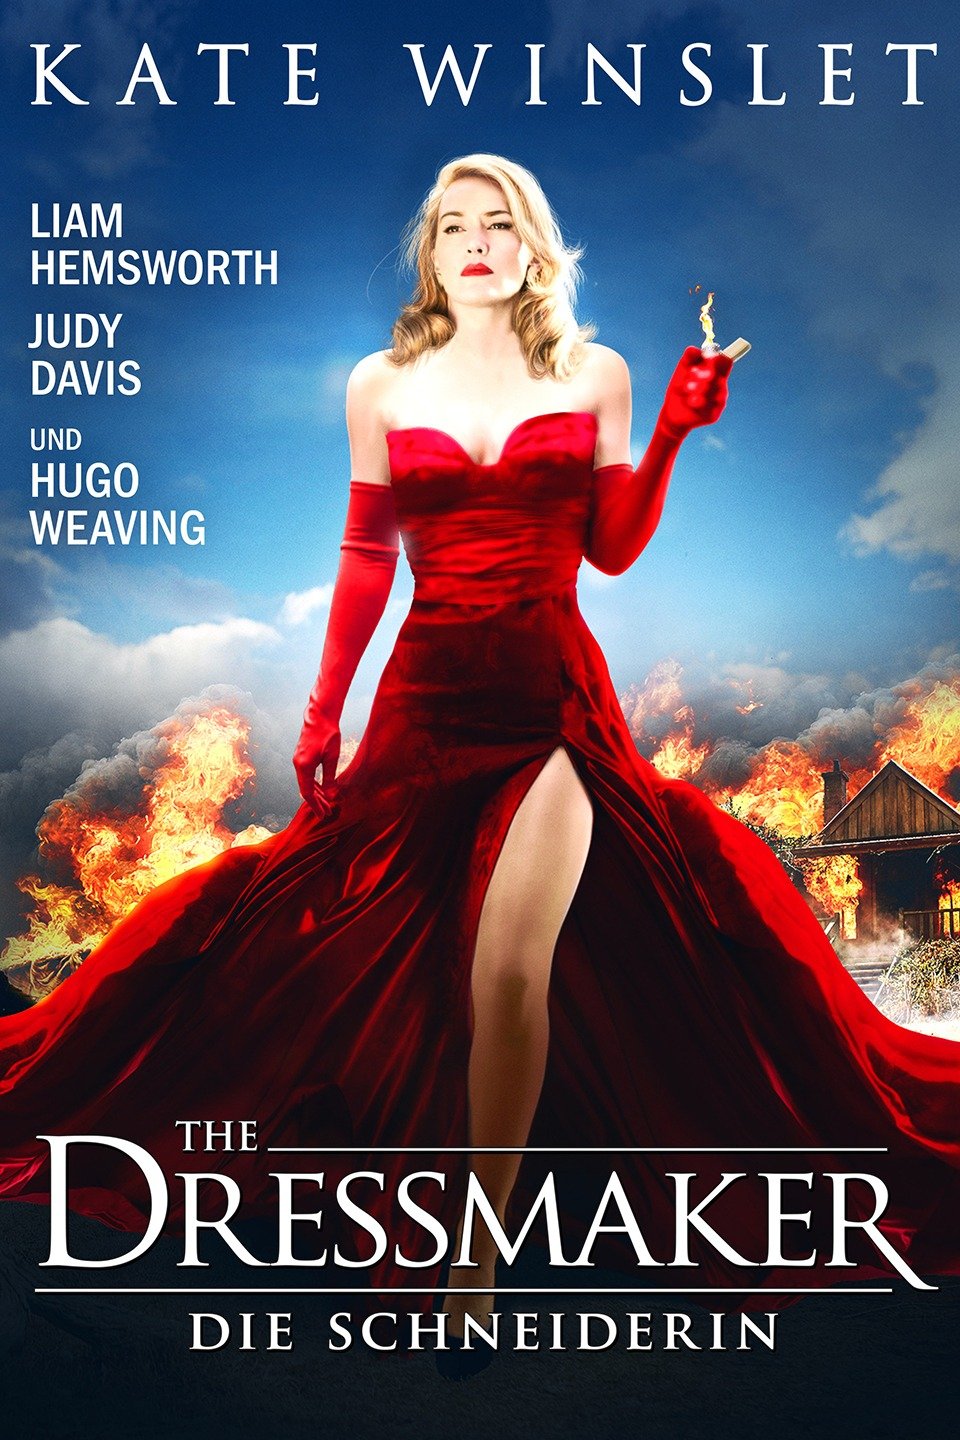 "The Dressmaker", 2015